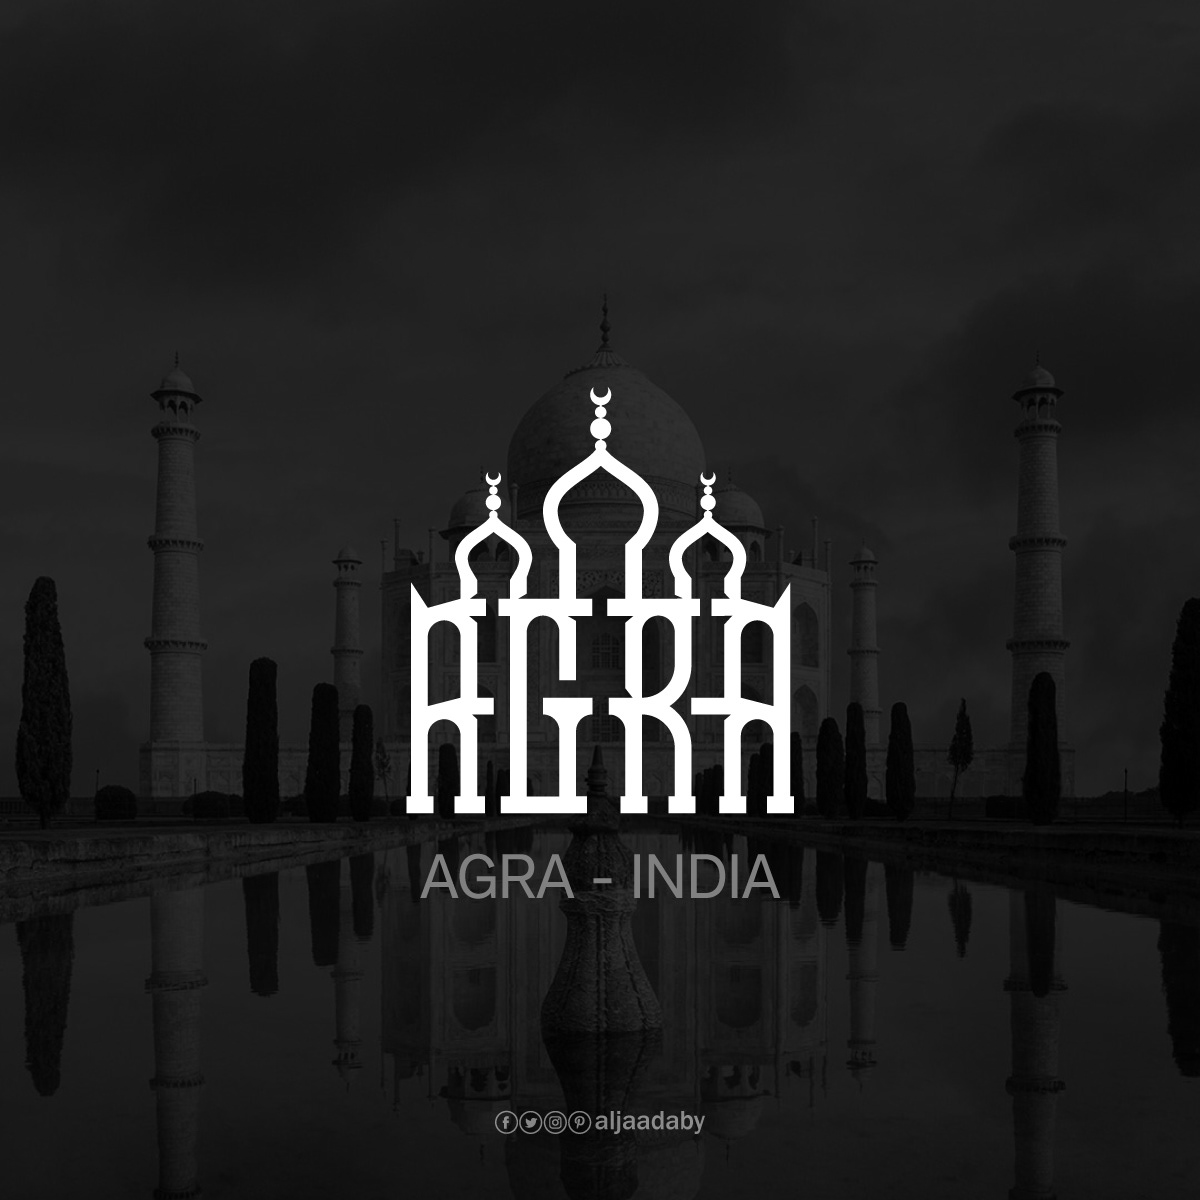 Typographic city logos based on their famous landmarks - Agra